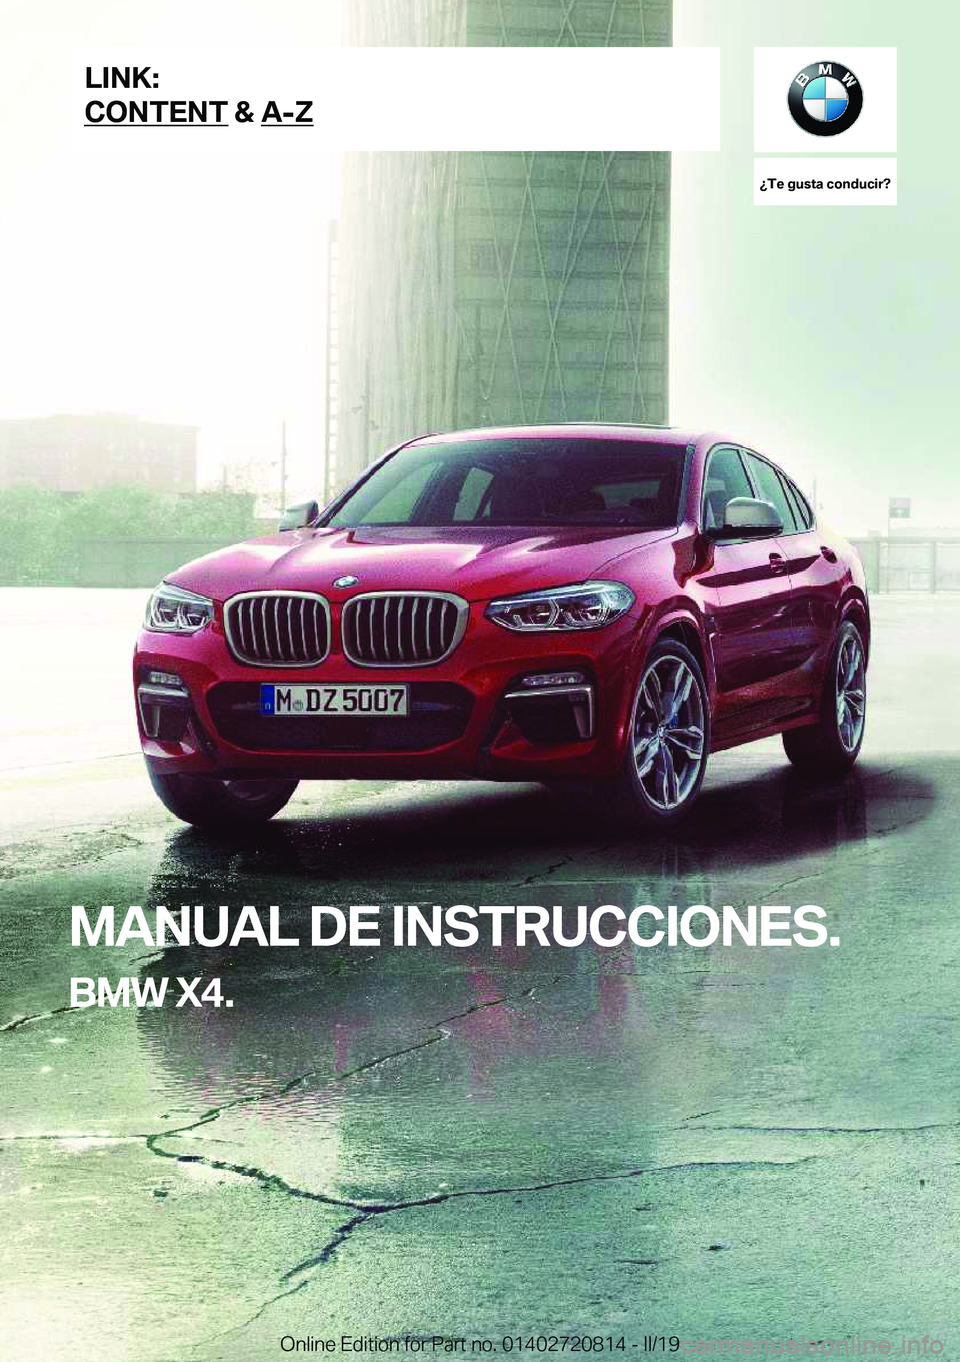 BMW X4 2019  Manuales de Empleo (in Spanish) ��T�e��g�u�s�t�a��c�o�n�d�u�c�i�r� 
�M�A�N�U�A�L��D�E��I�N�S�T�R�U�C�C�I�O�N�E�S�.
�B�M�W��X�4�.�L�I�N�K�:
�C�O�N�T�E�N�T��&��A�-�Z�O�n�l�i�n�e��E�d�i�t�i�o�n��f�o�r��P�a�r�t��n�o�.��0�1�